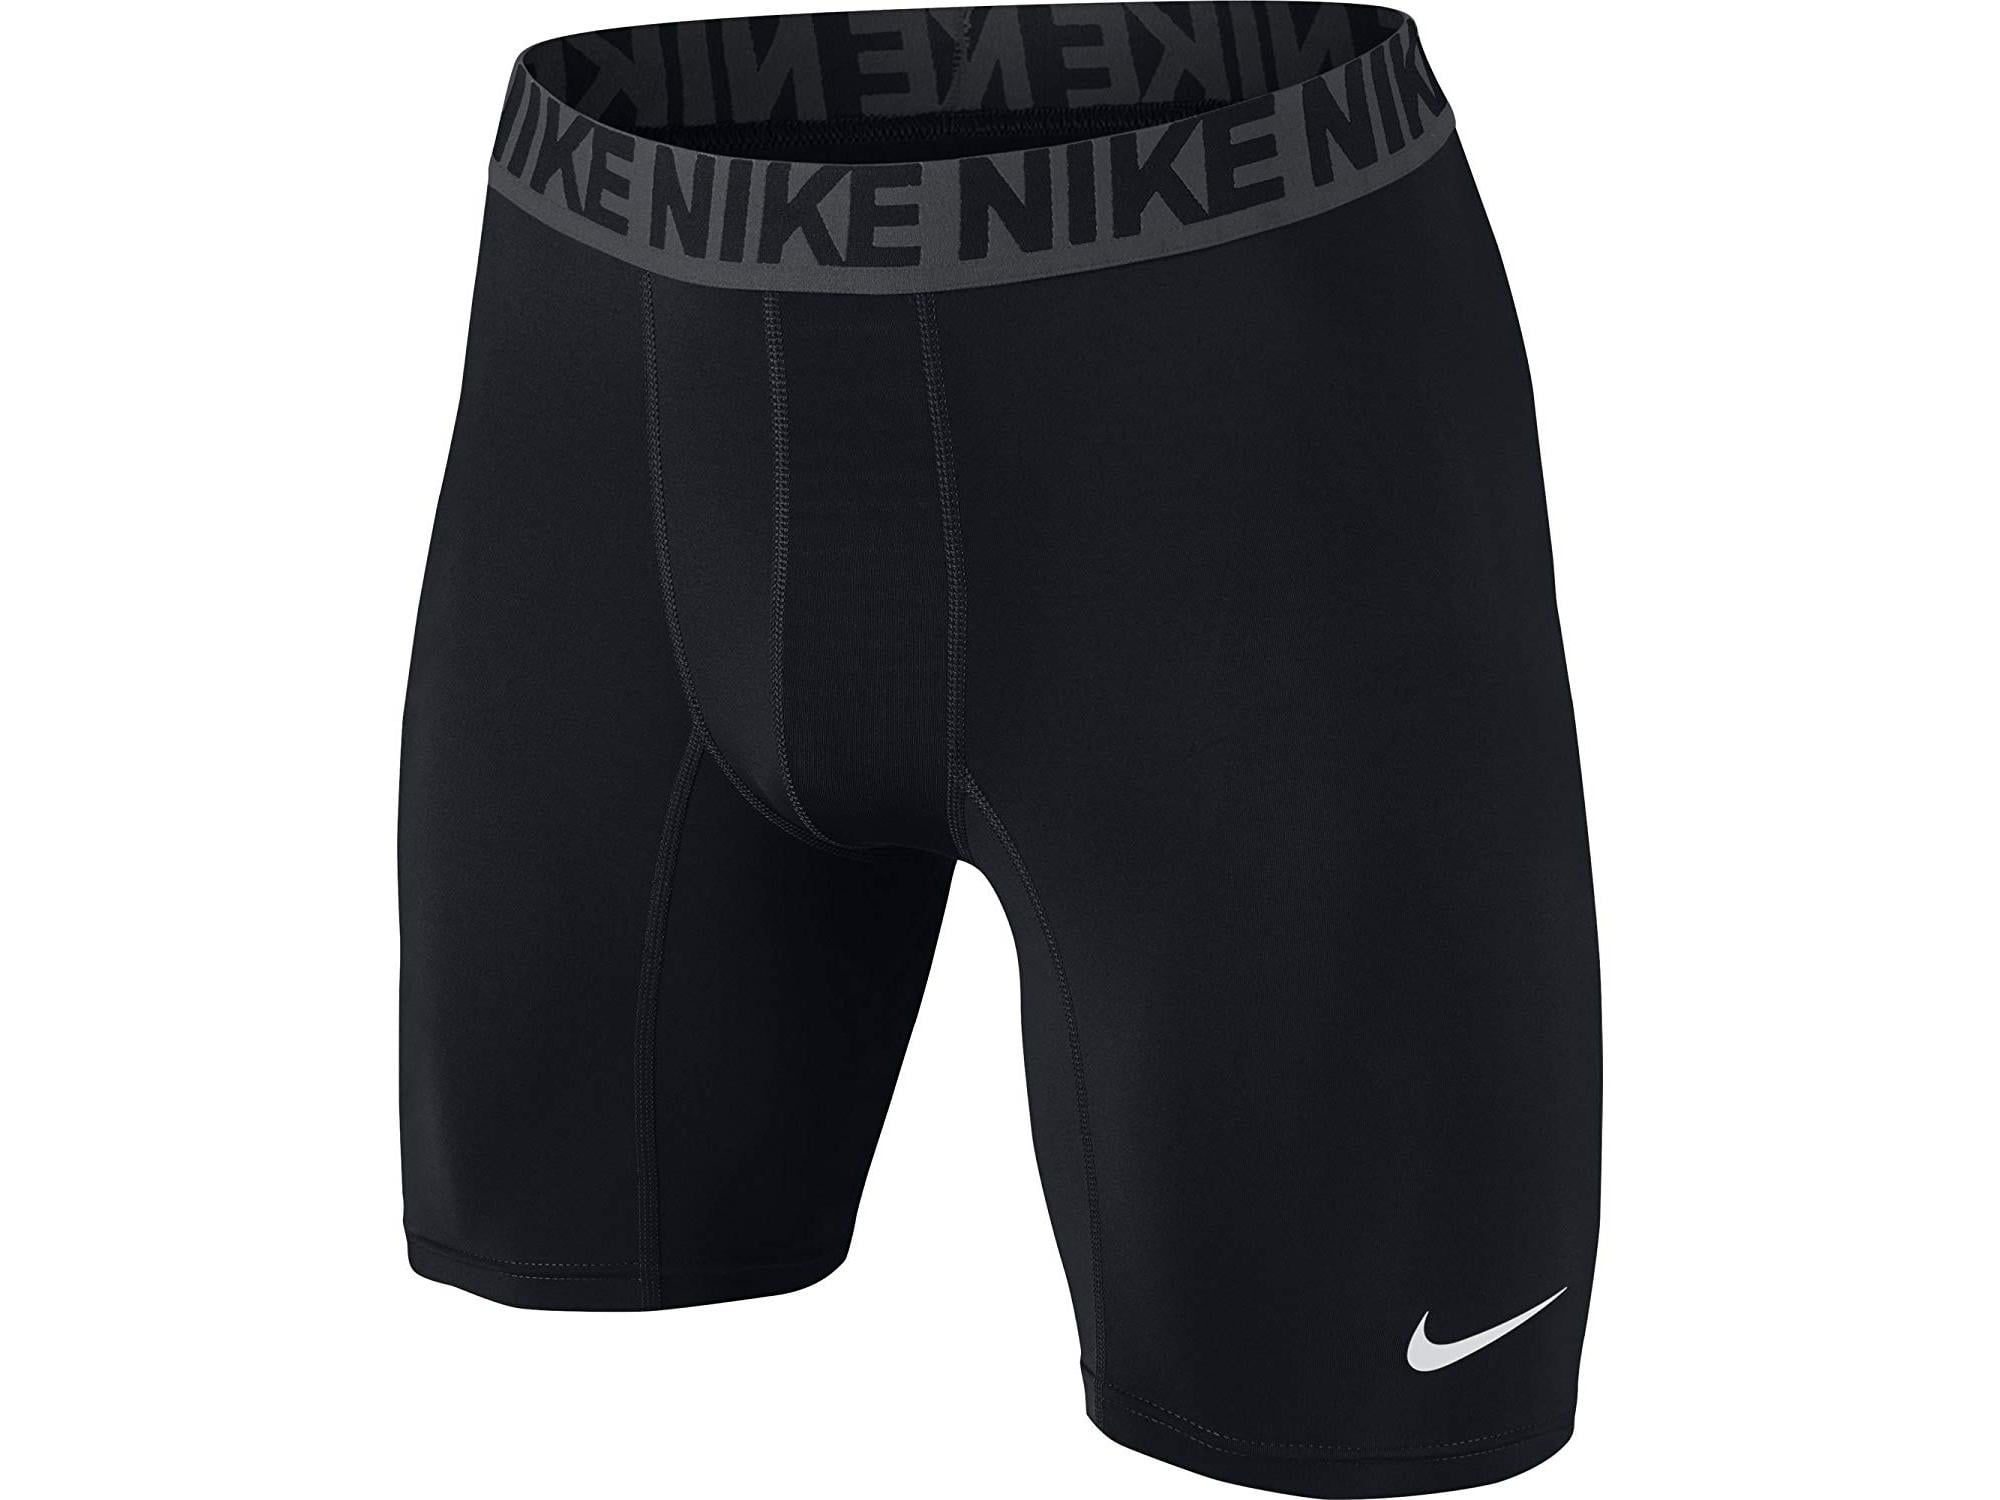 nike men's baselayer training shorts